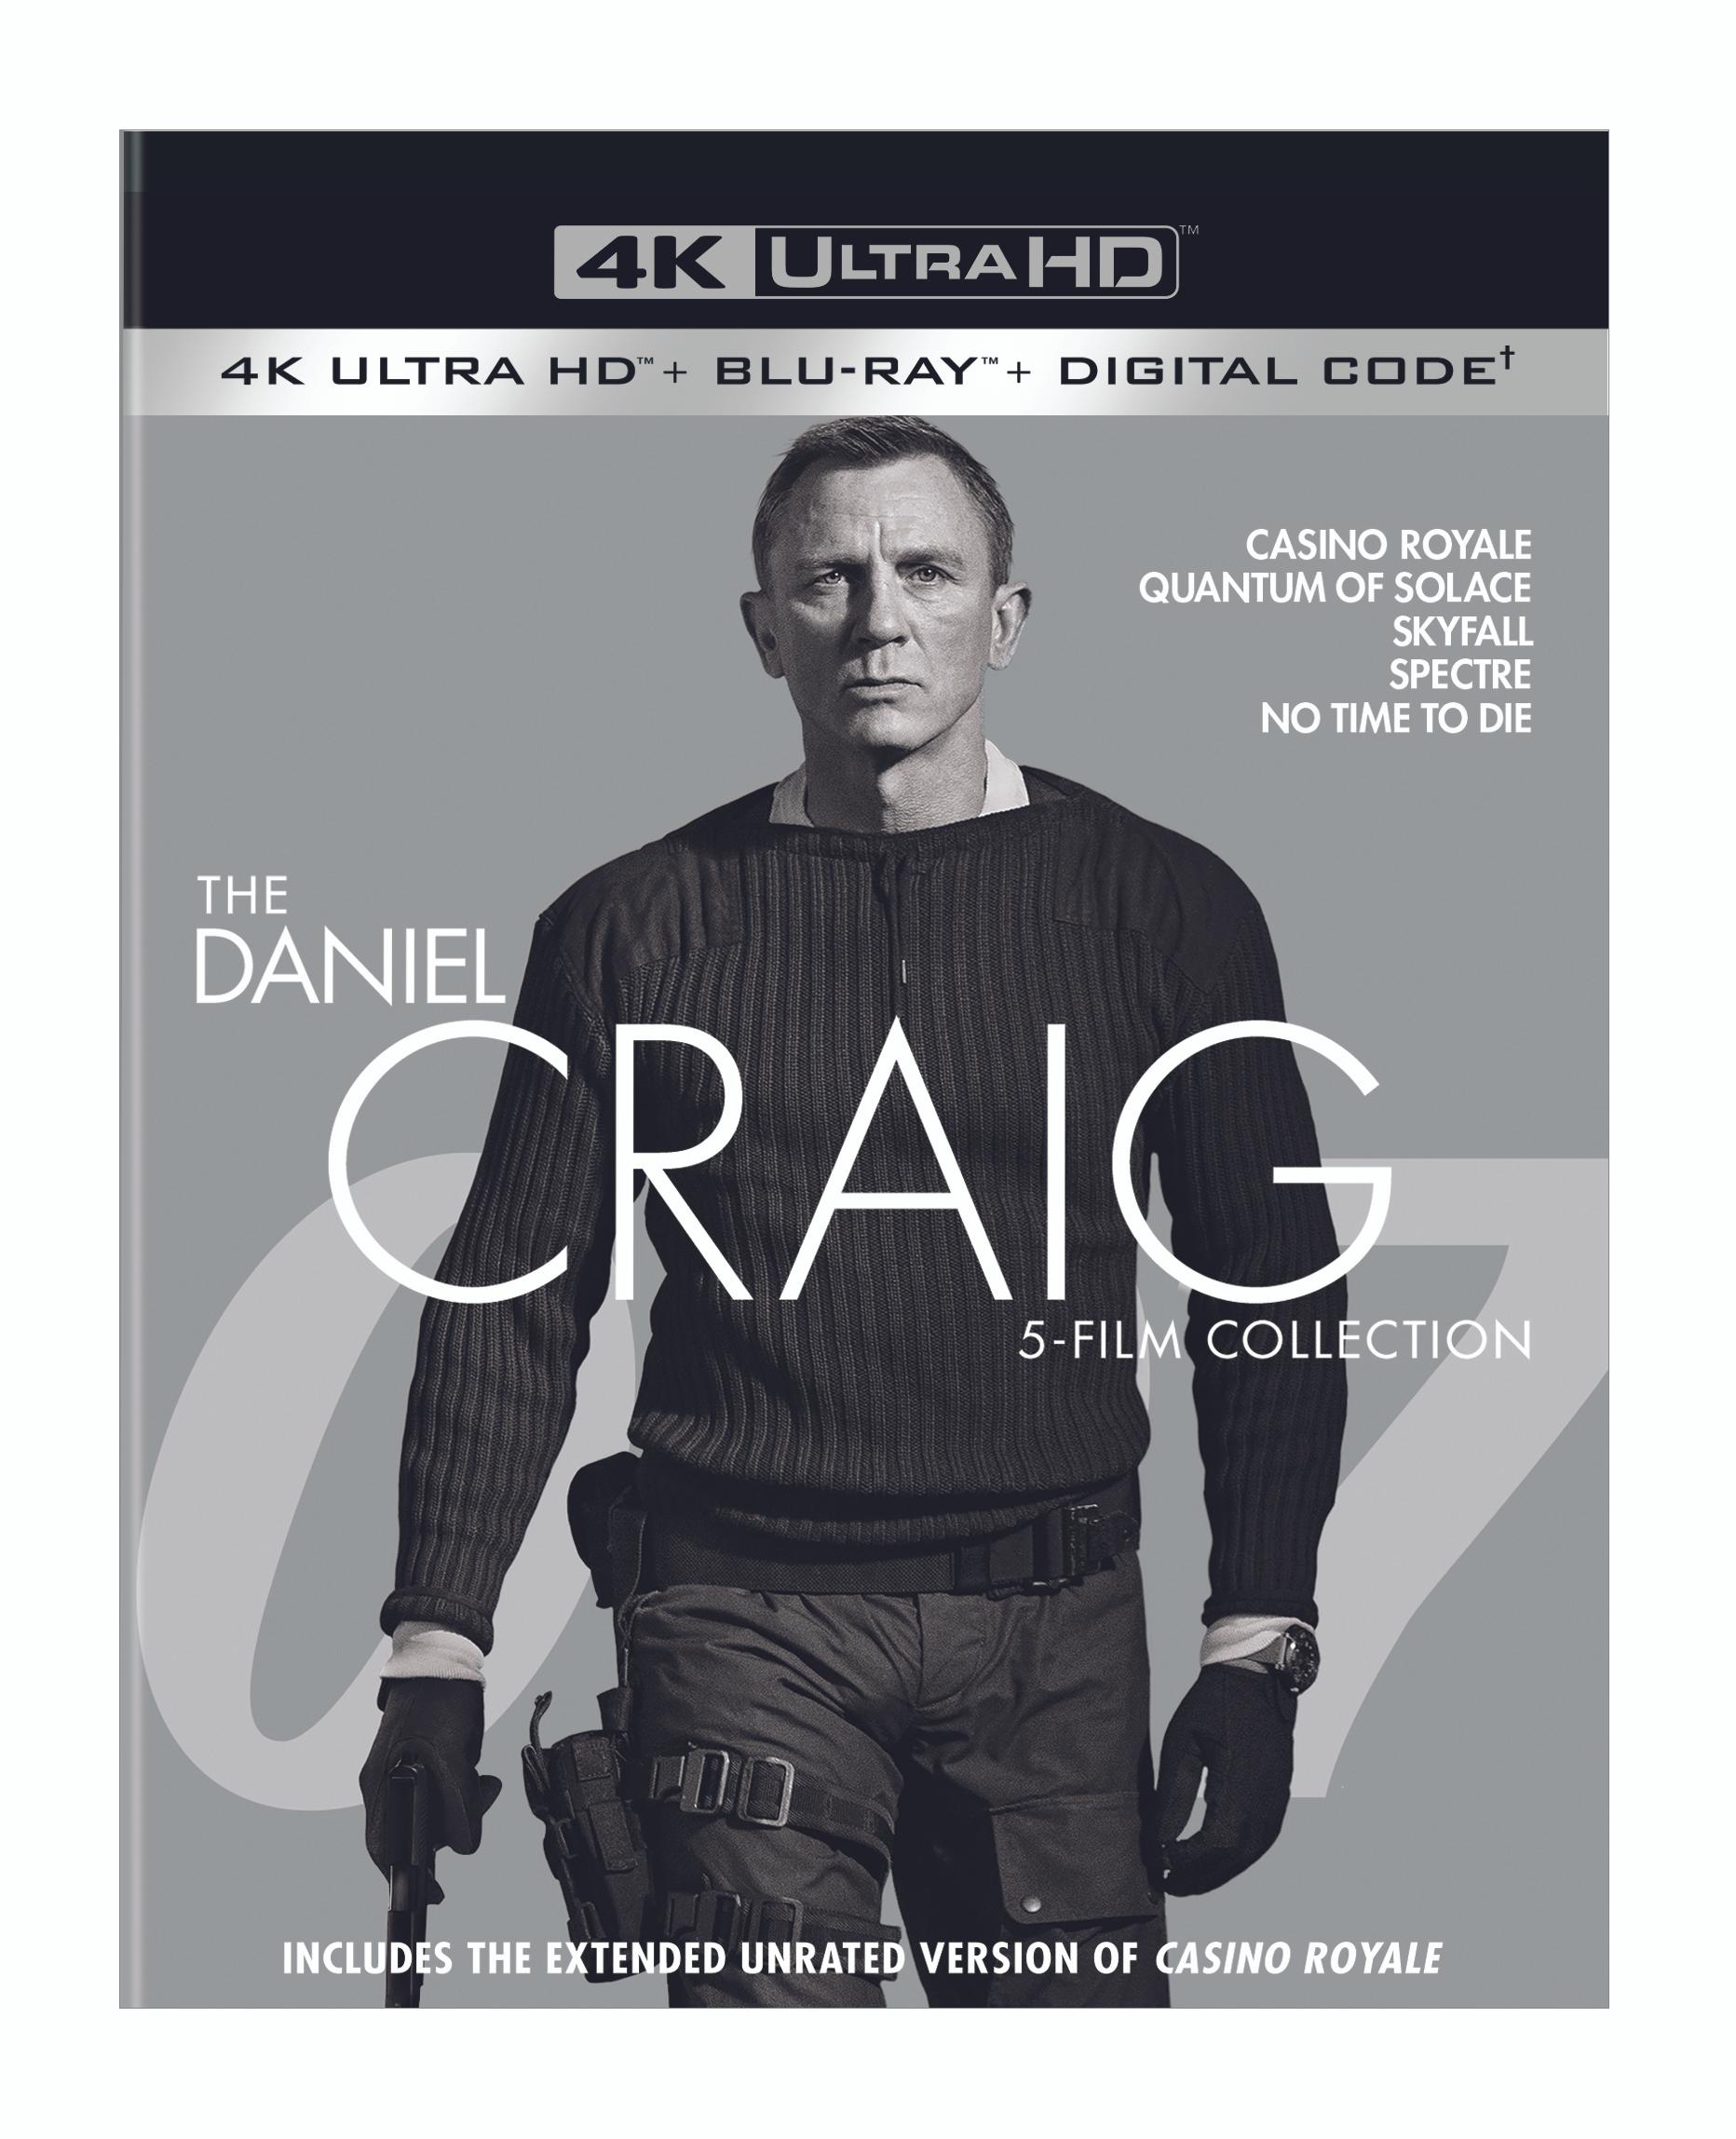 James Bond: The Daniel Craig 5-Film Collection (4K Ultra HD + Blu-ray) - UHD   - Action Movies On 4K Ultra HD Blu-ray - Movies On GRUV